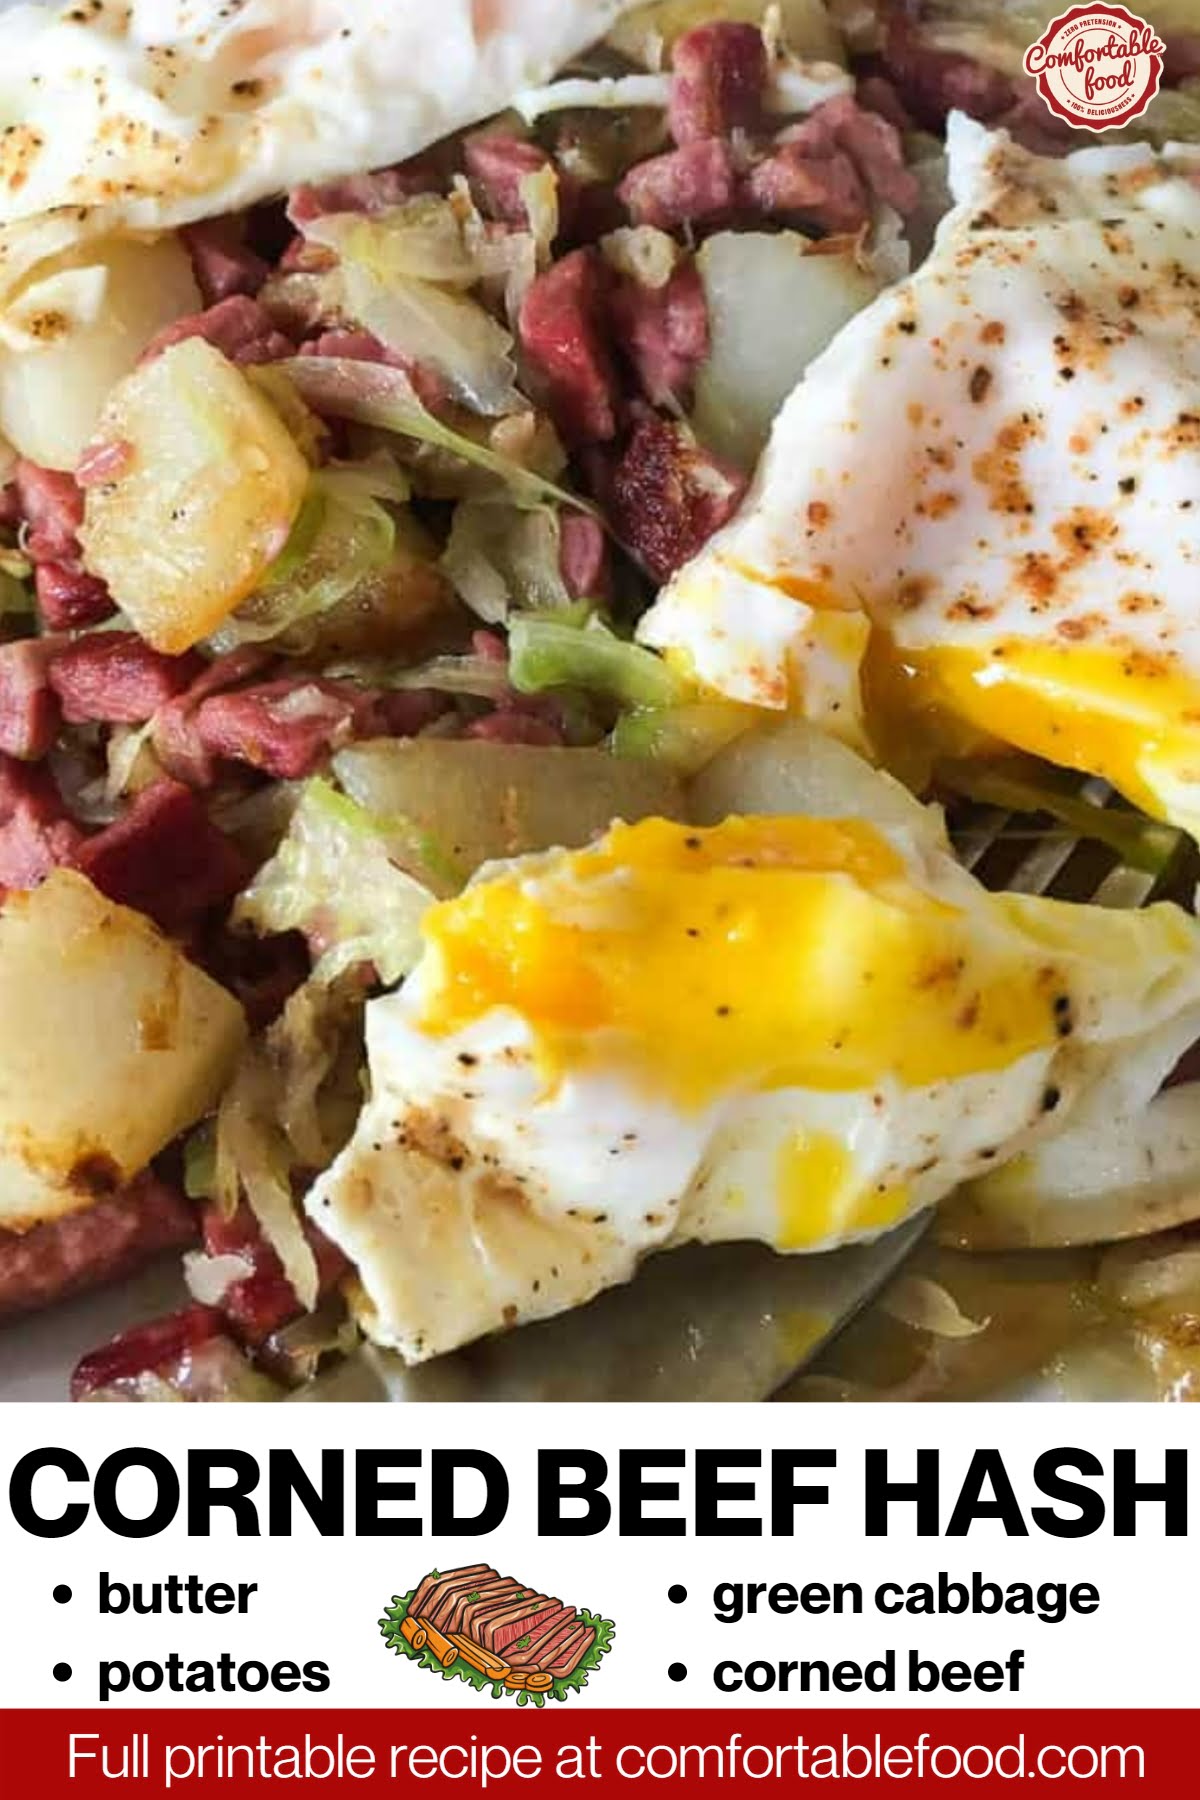 Corned beef hash socials